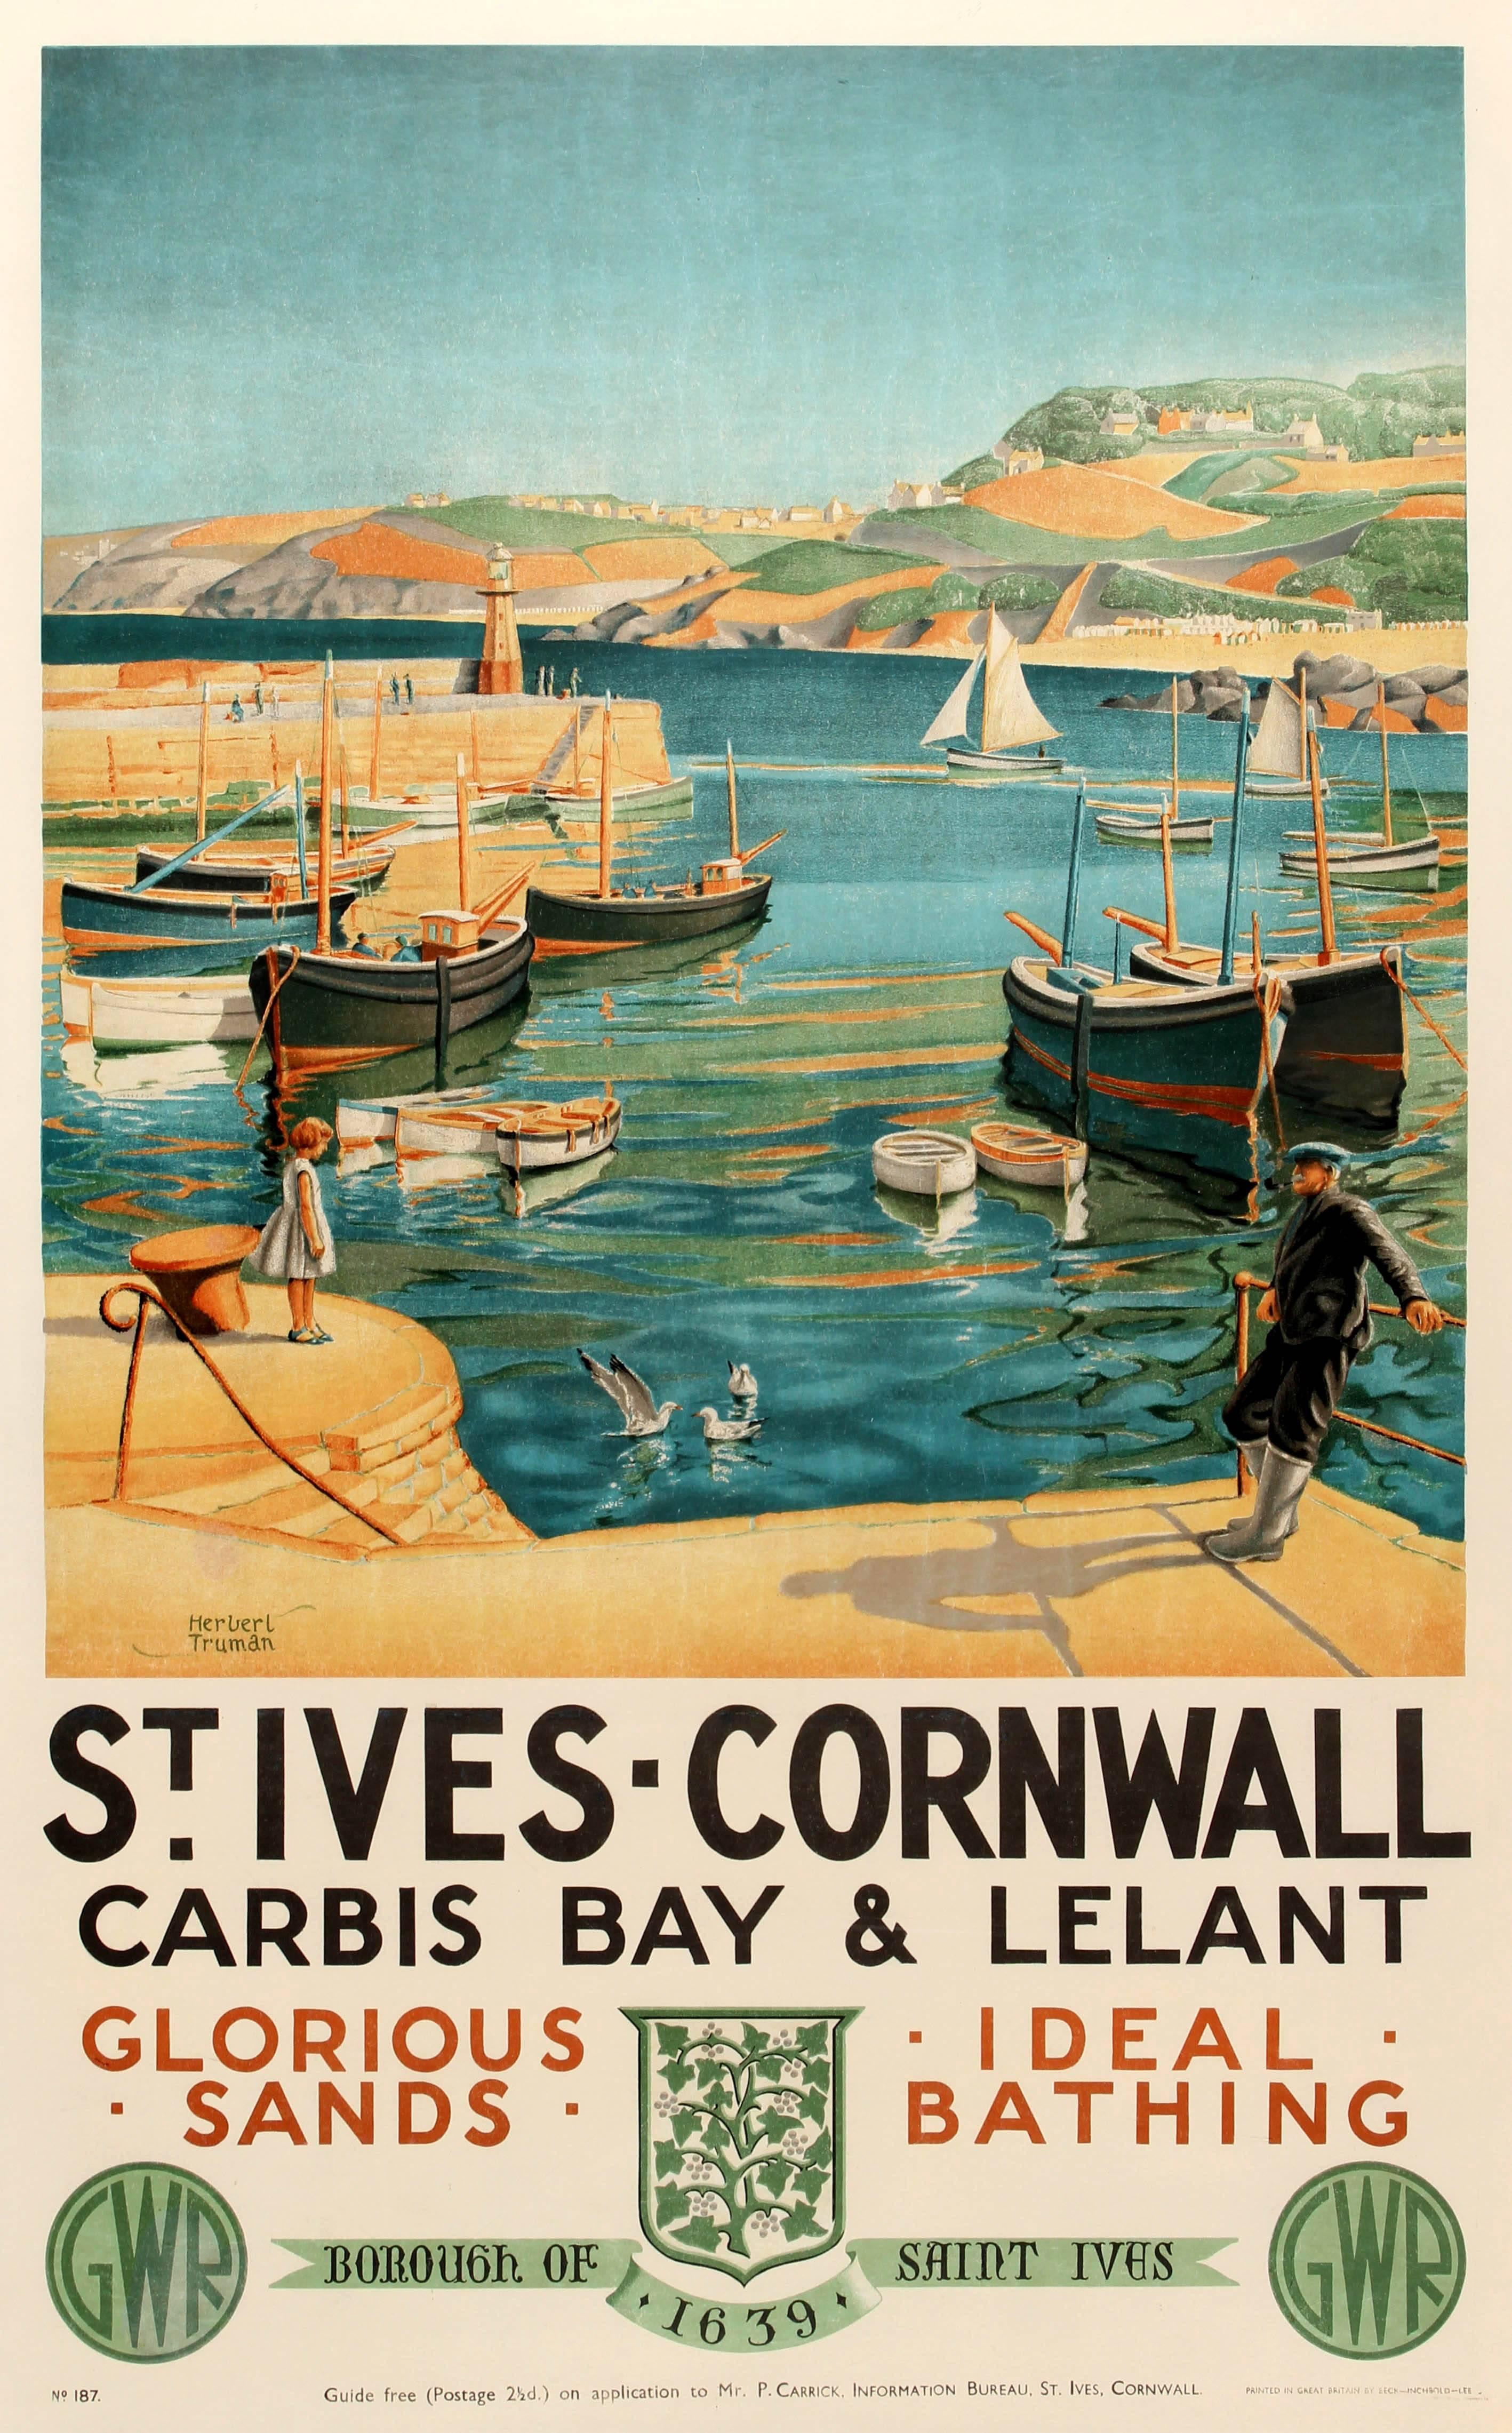 Herbert Truman Print - Original GWR Great Western Railway Poster - St Ives Cornwall Carbis Bay & Lelant